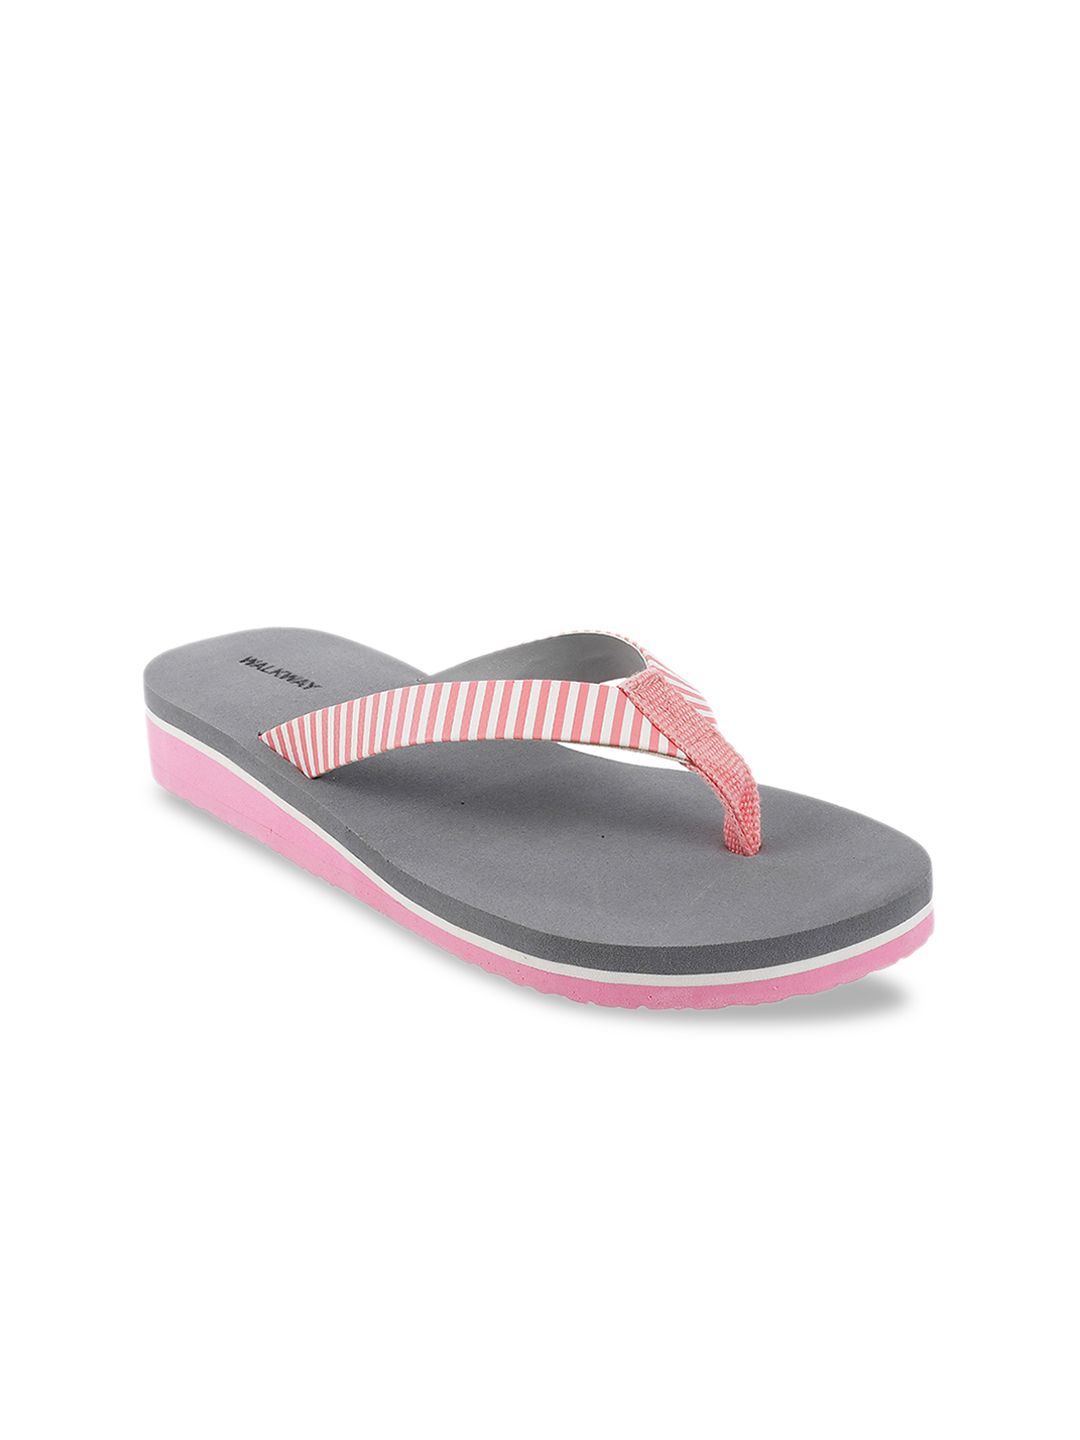 WALKWAY by Metro Women Pink Striped Thong Flip-Flops Price in India